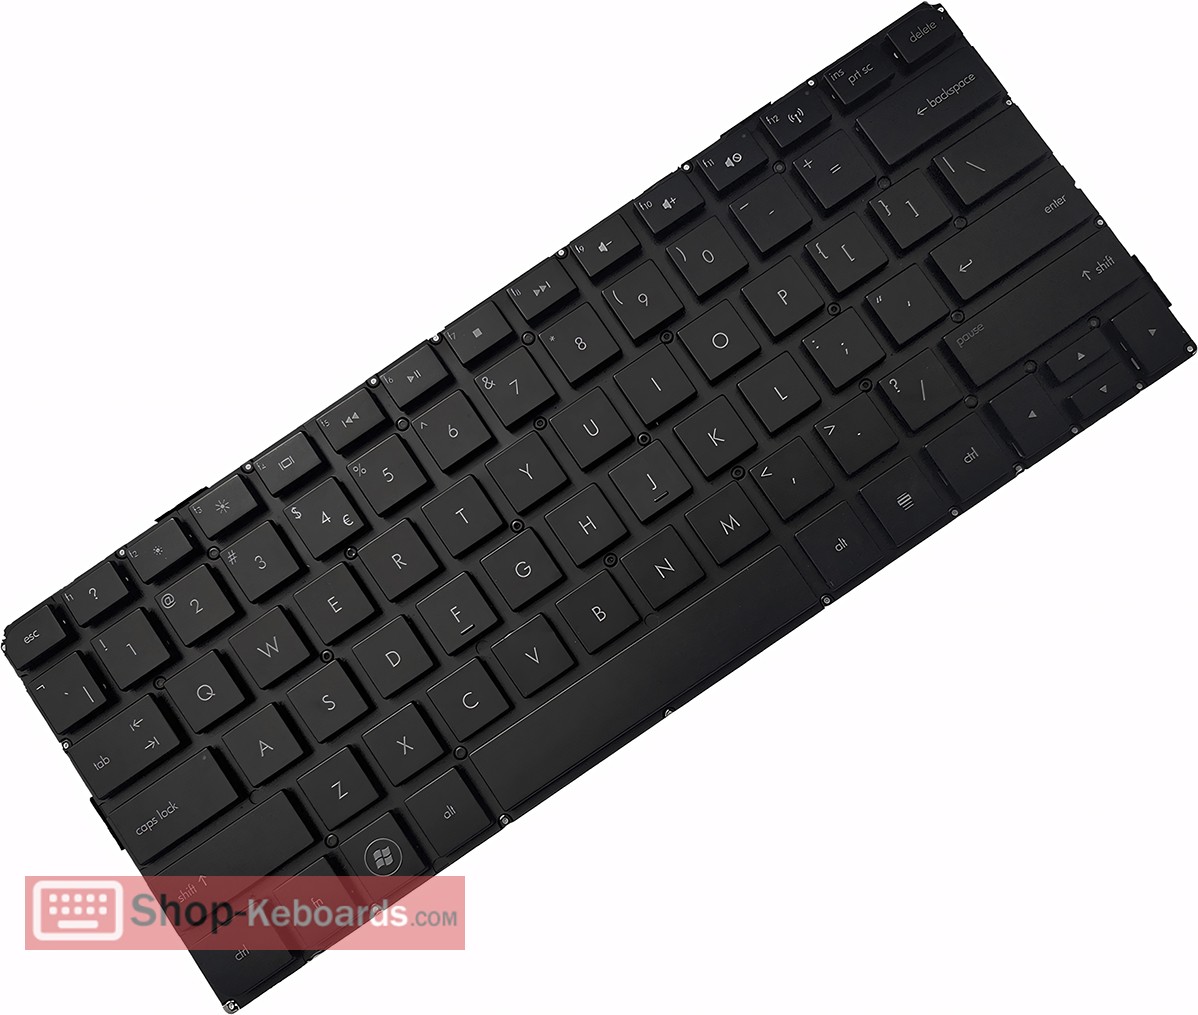 HP ENVY 13-1130NR  Keyboard replacement